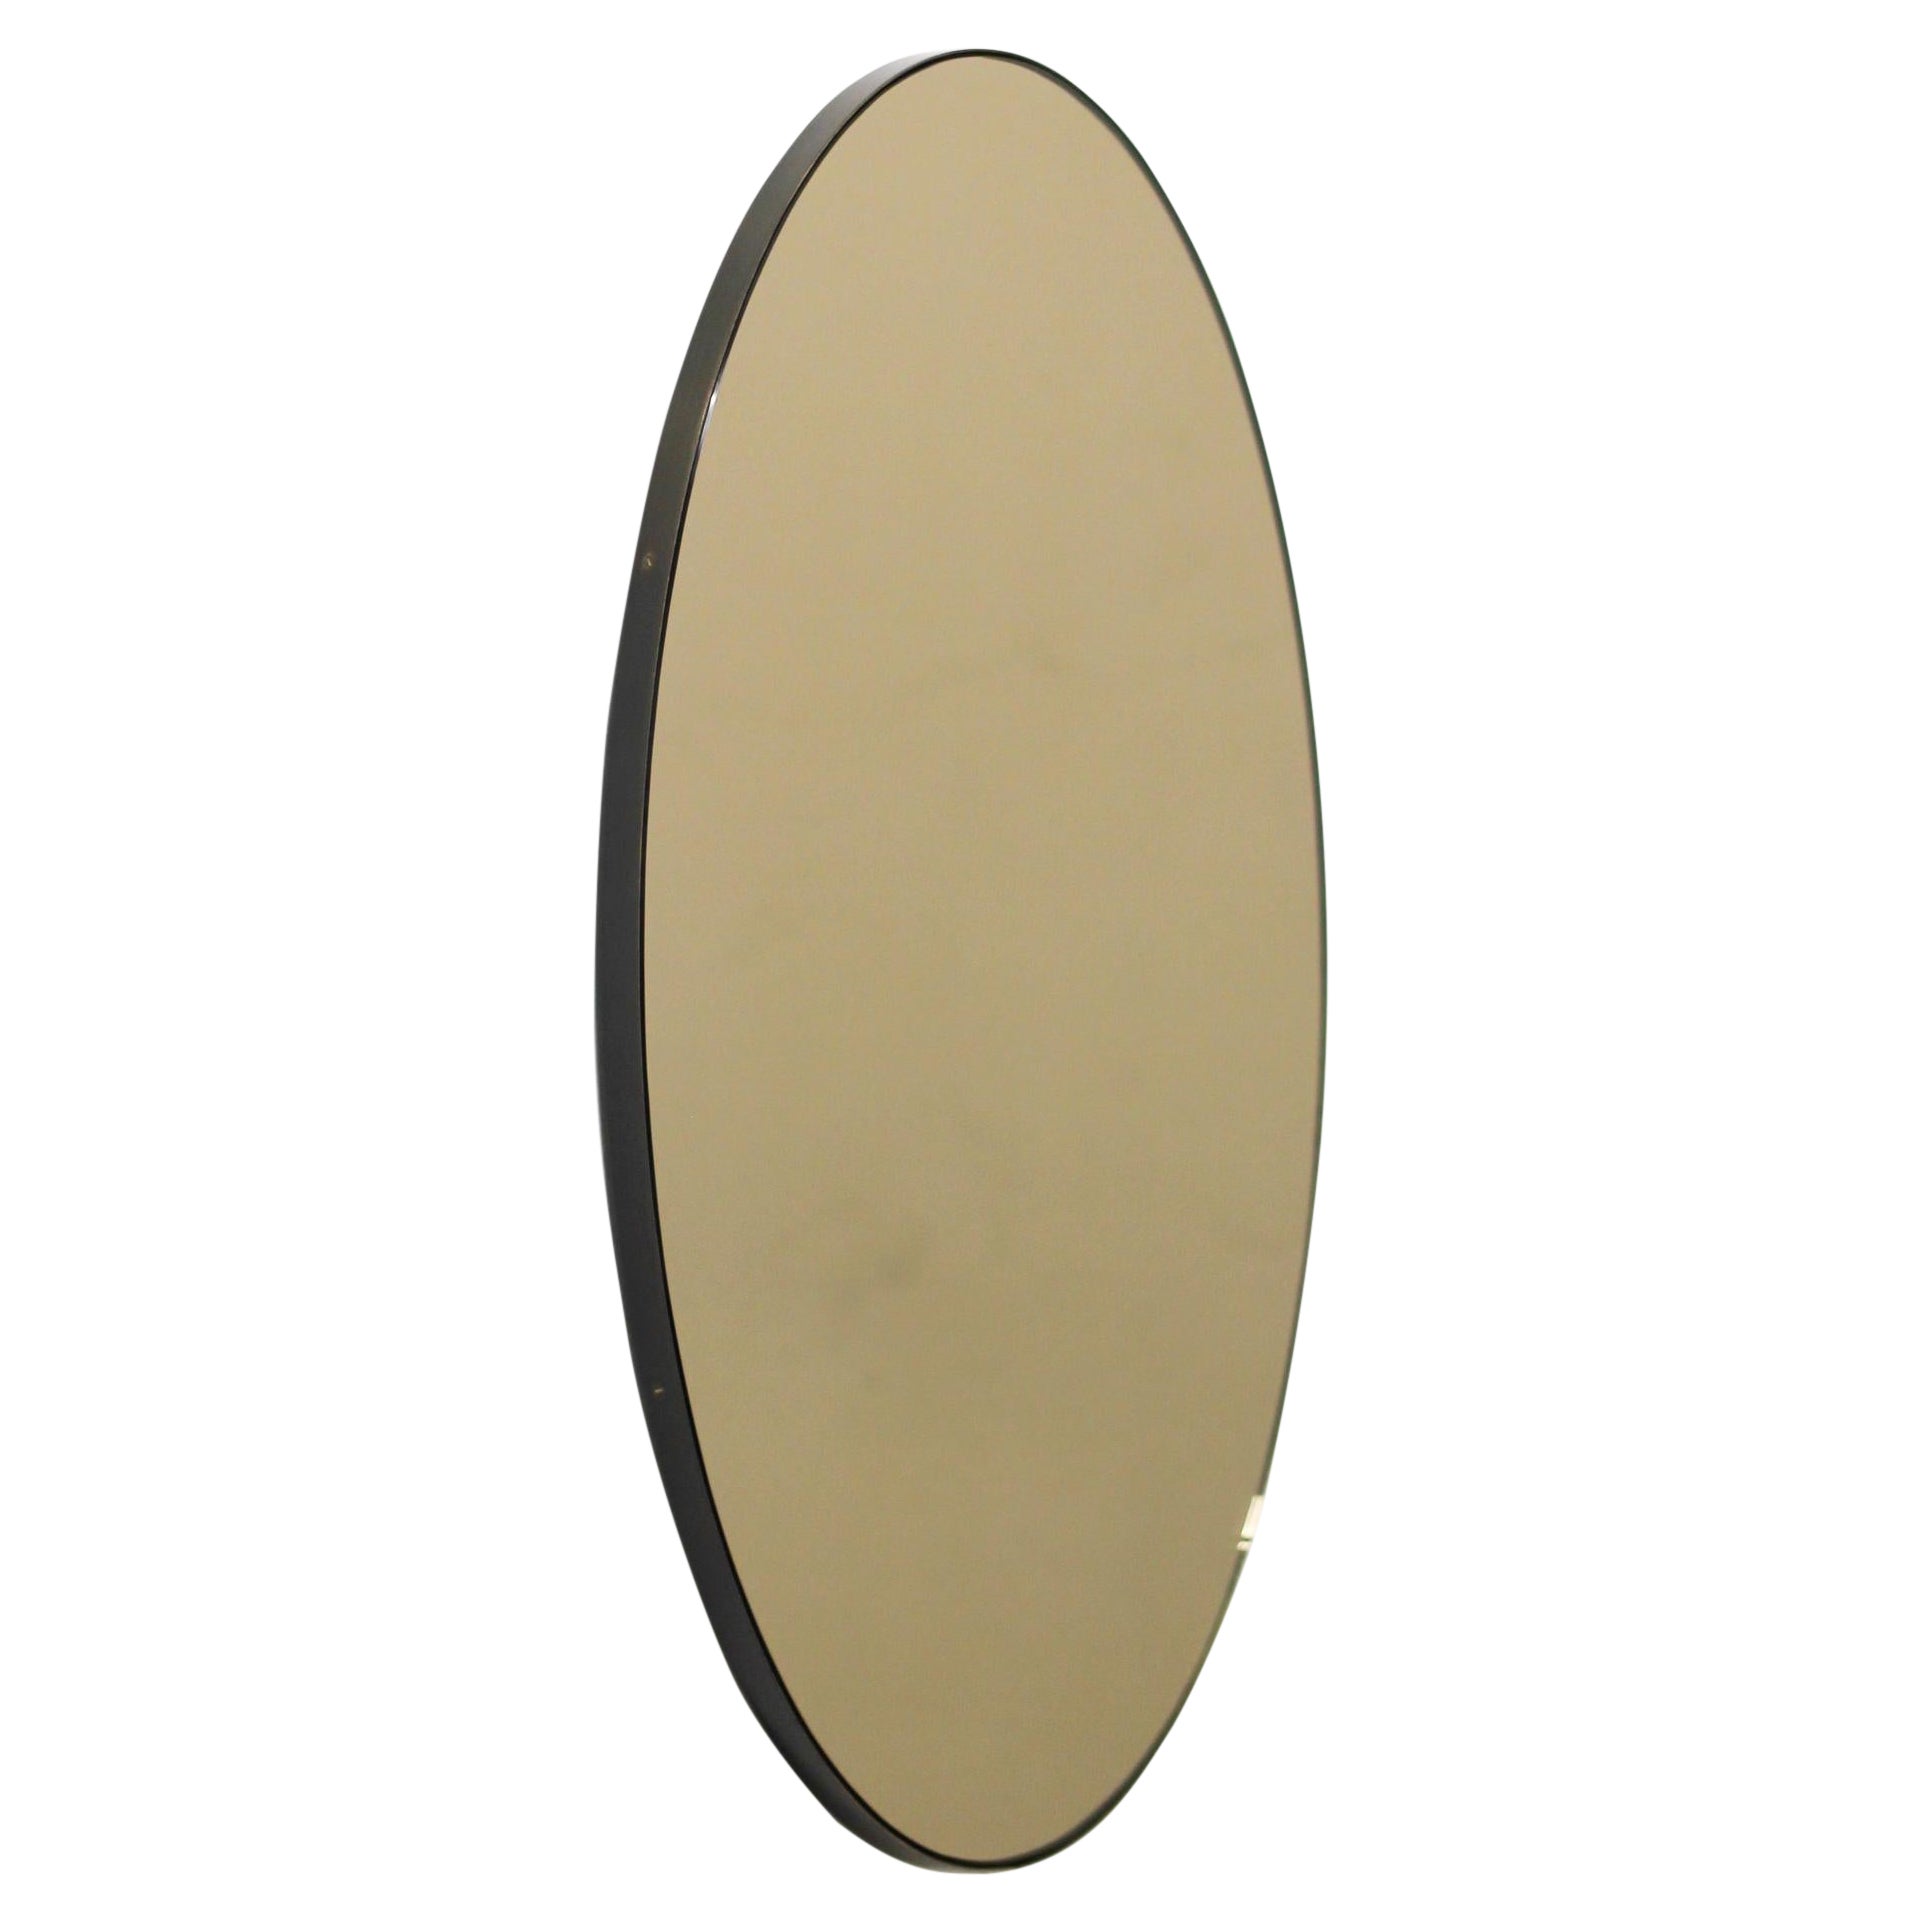 Ovalis Miroir moderne ovale teinté bronze avec cadre Patina, large